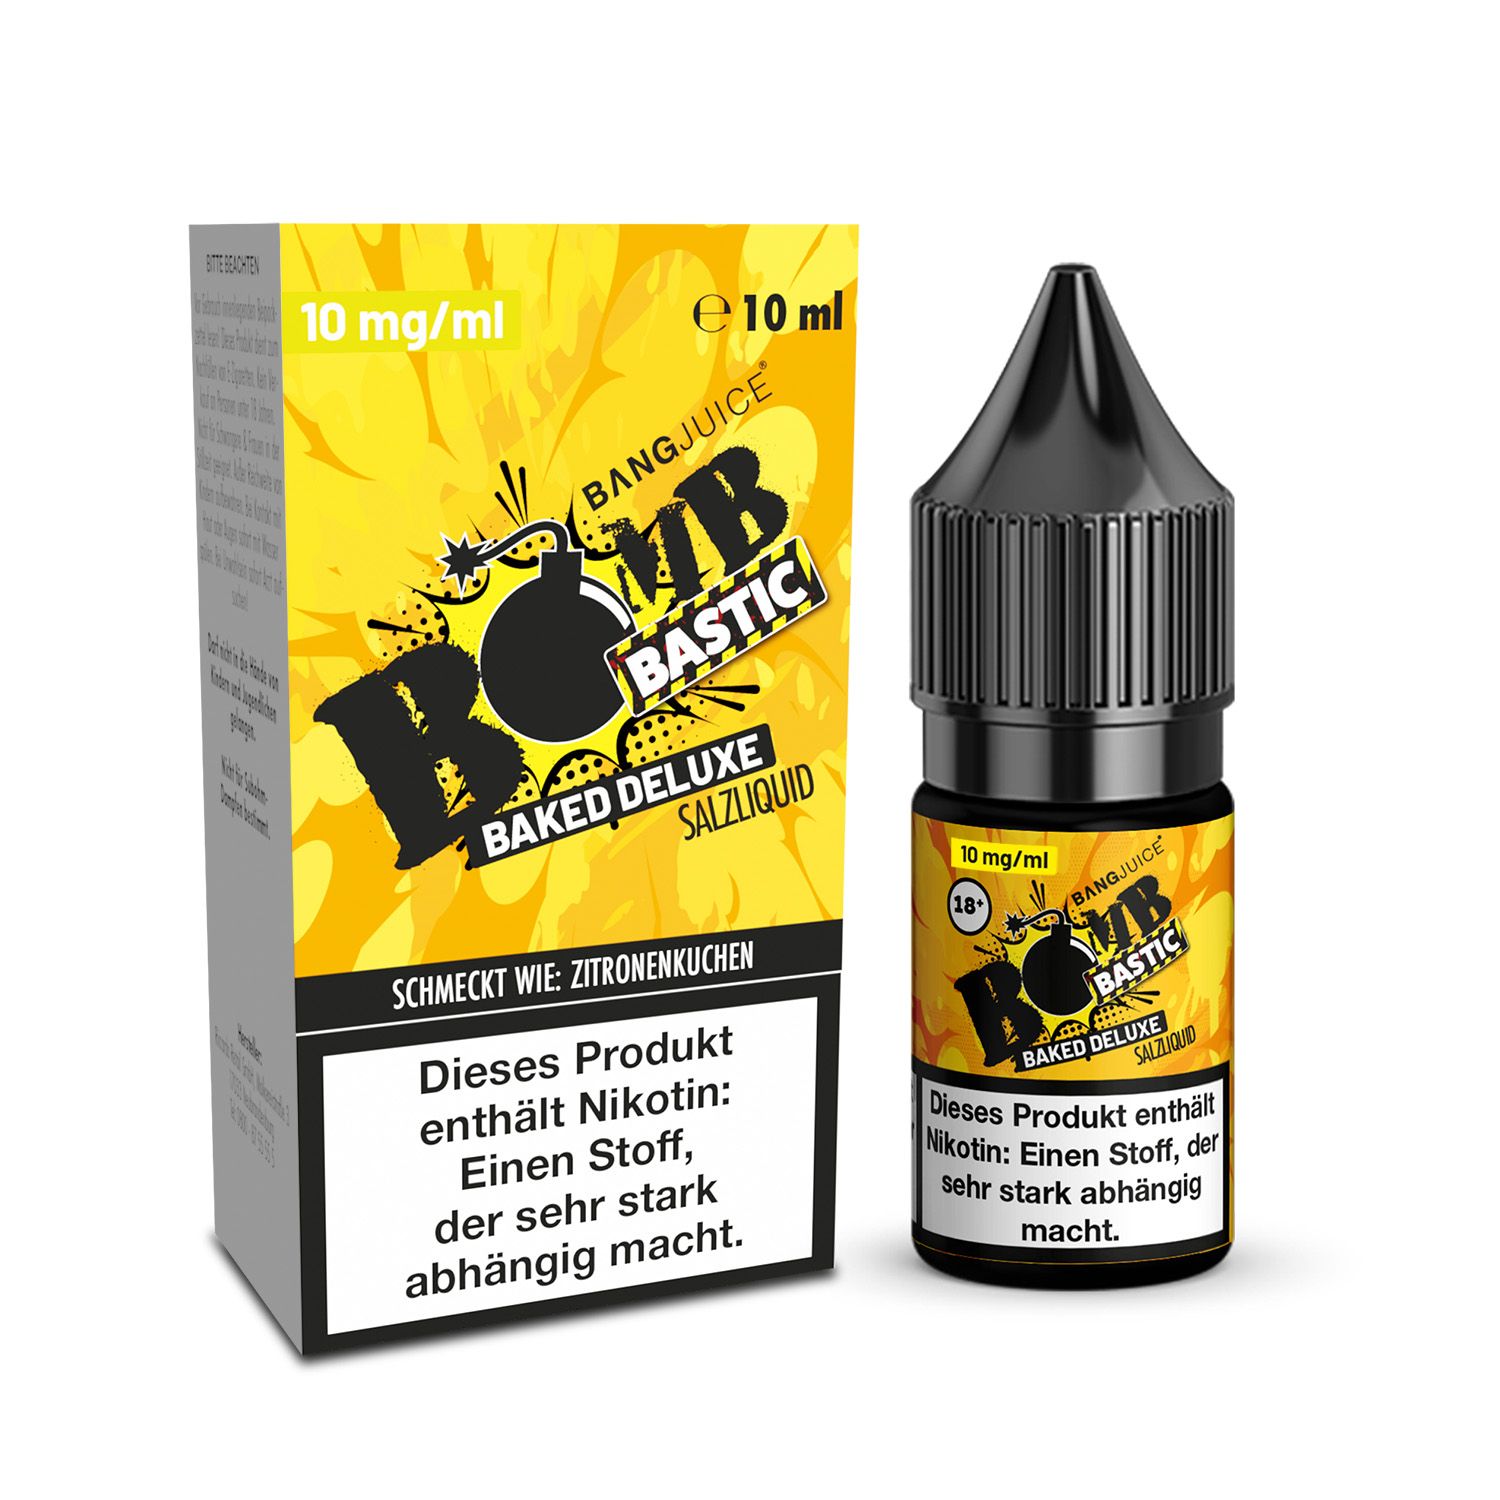 Bang Juice Bomb Bastic BAKED DELUXE Nikotinsalz Liquid 10mg/ml 